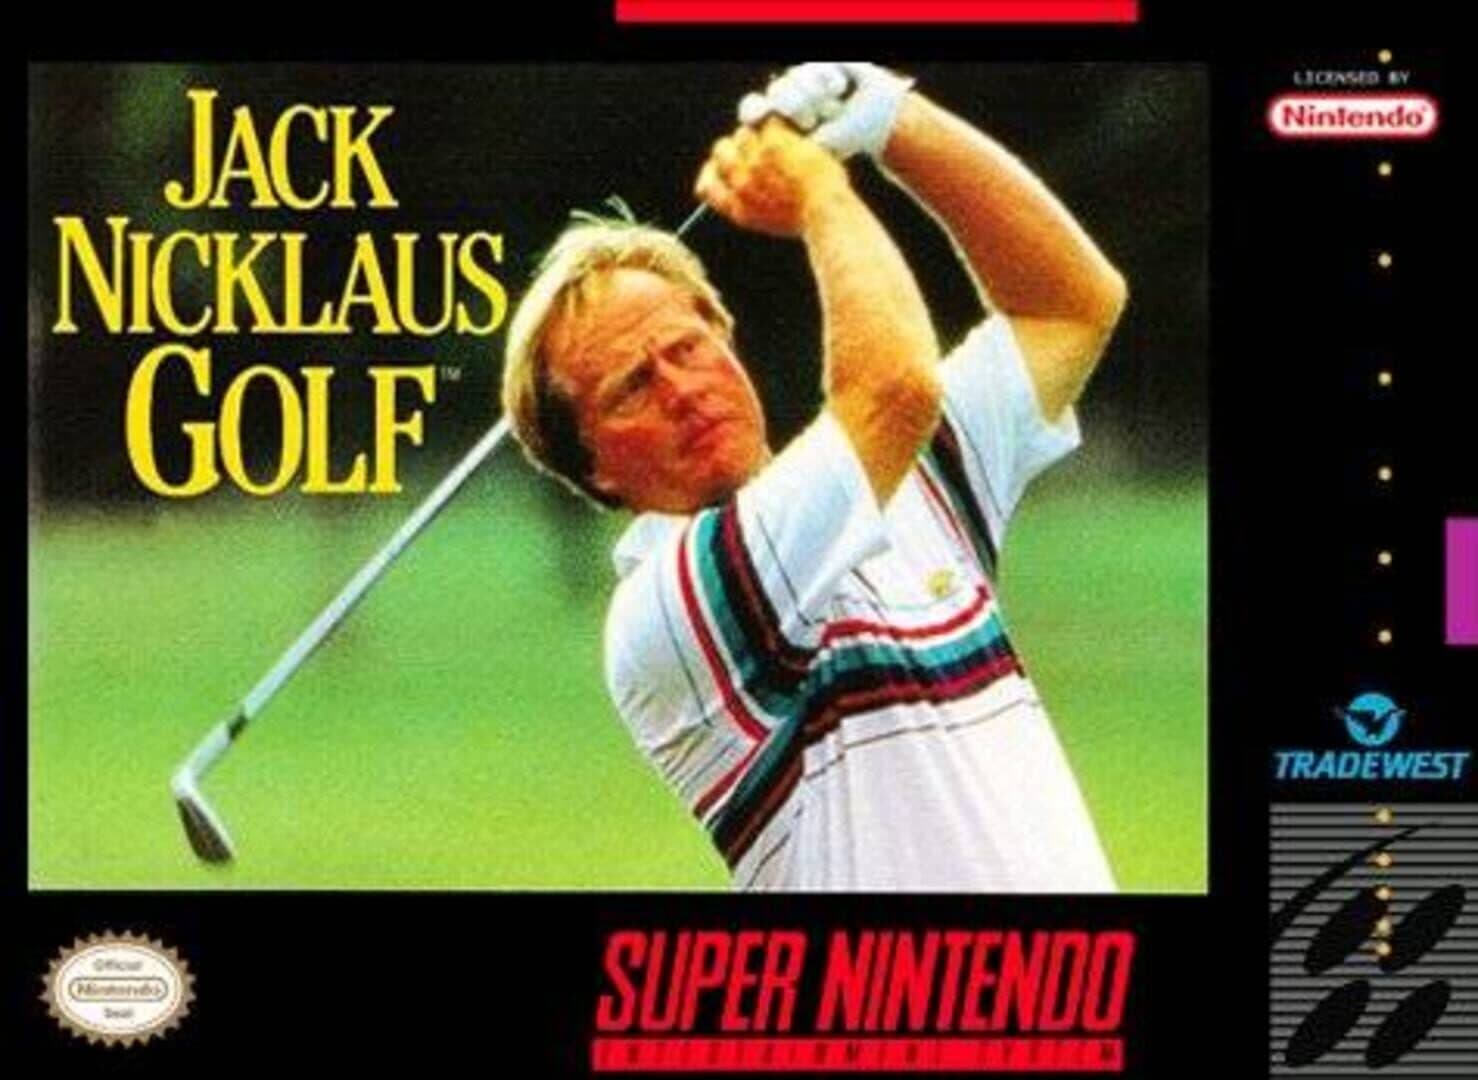 Jack Nicklaus Golf cover art